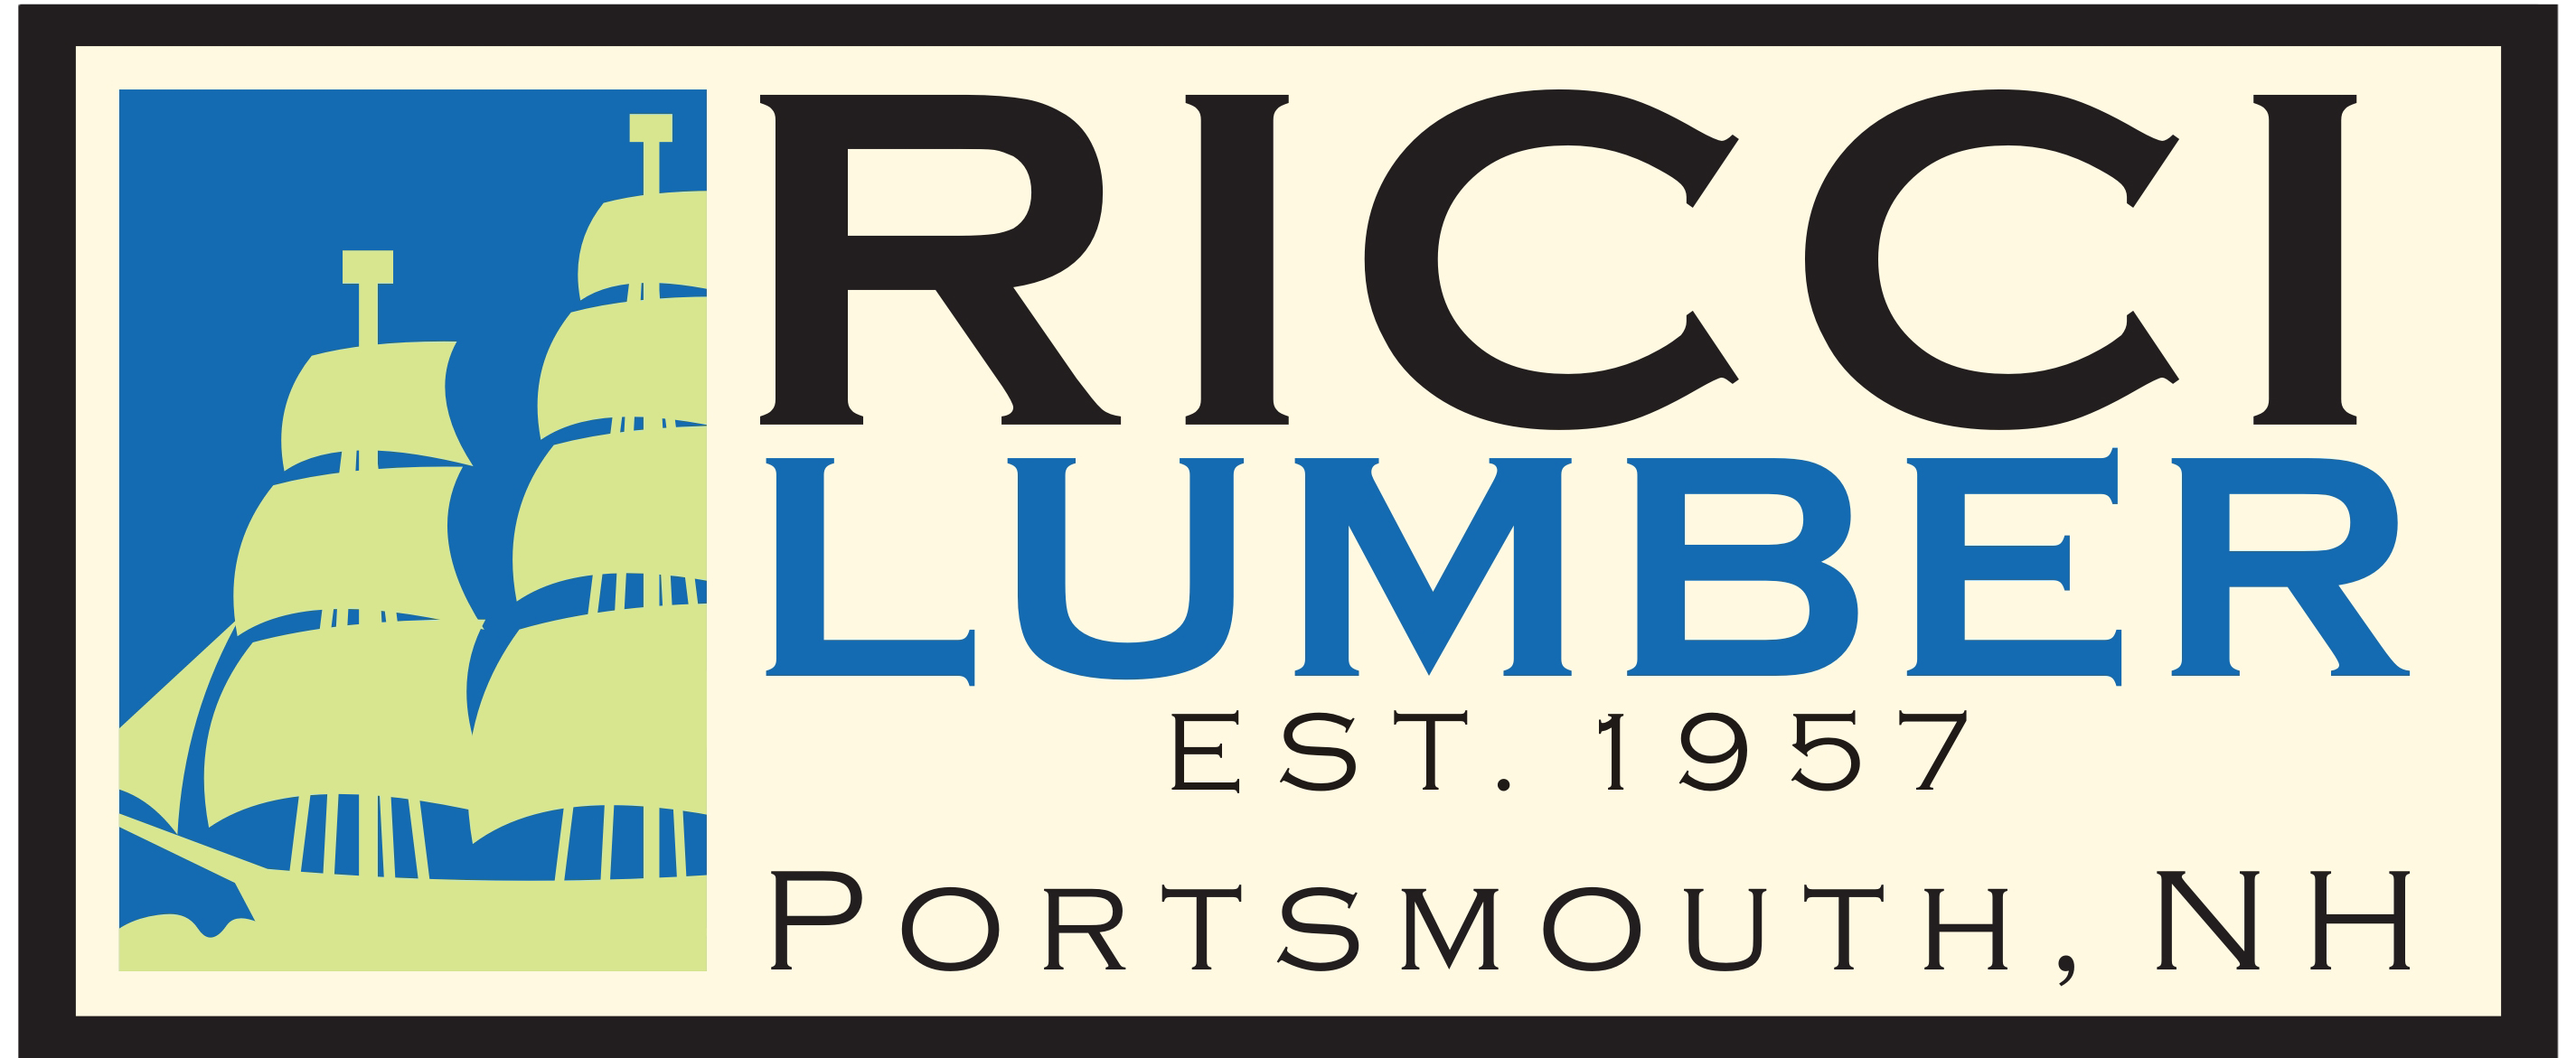 Ricci Lumber logo